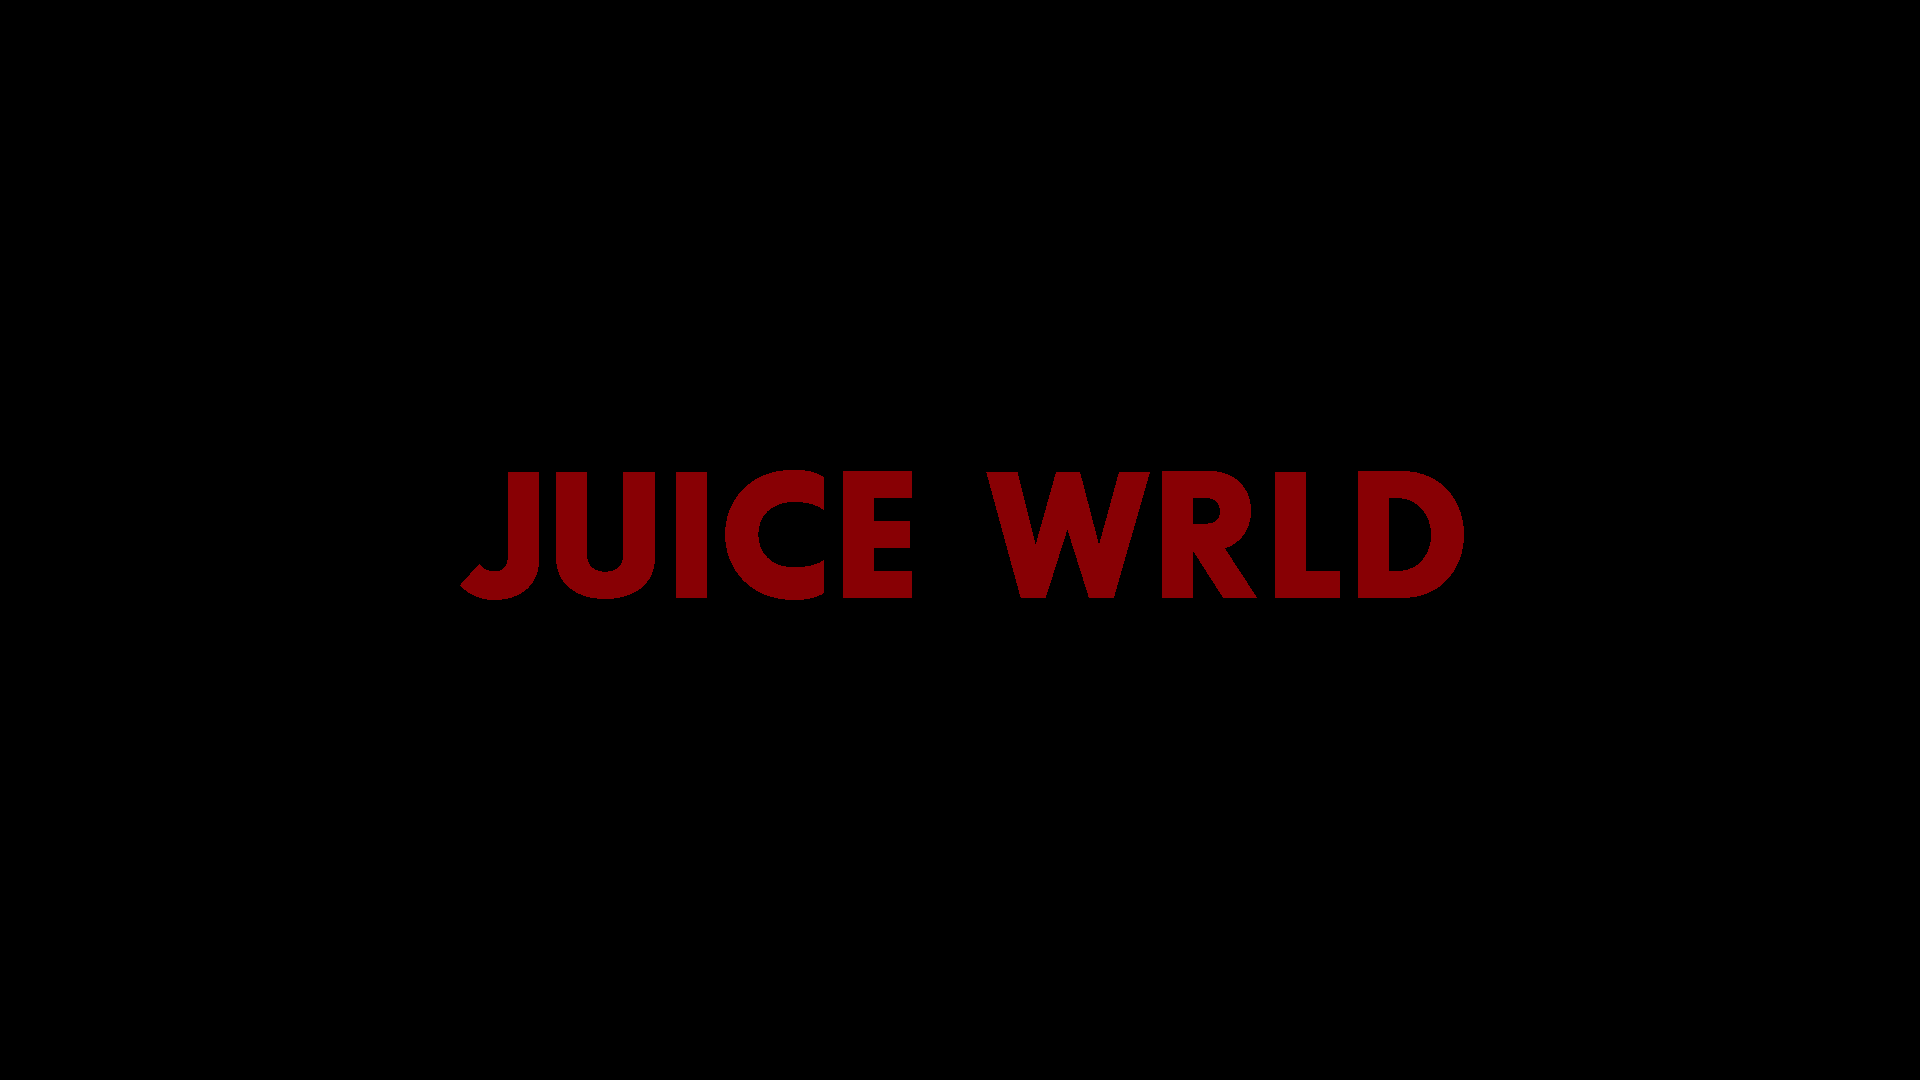 Juice WRLD Wallpaper on Black Background  Juice WRLD Background